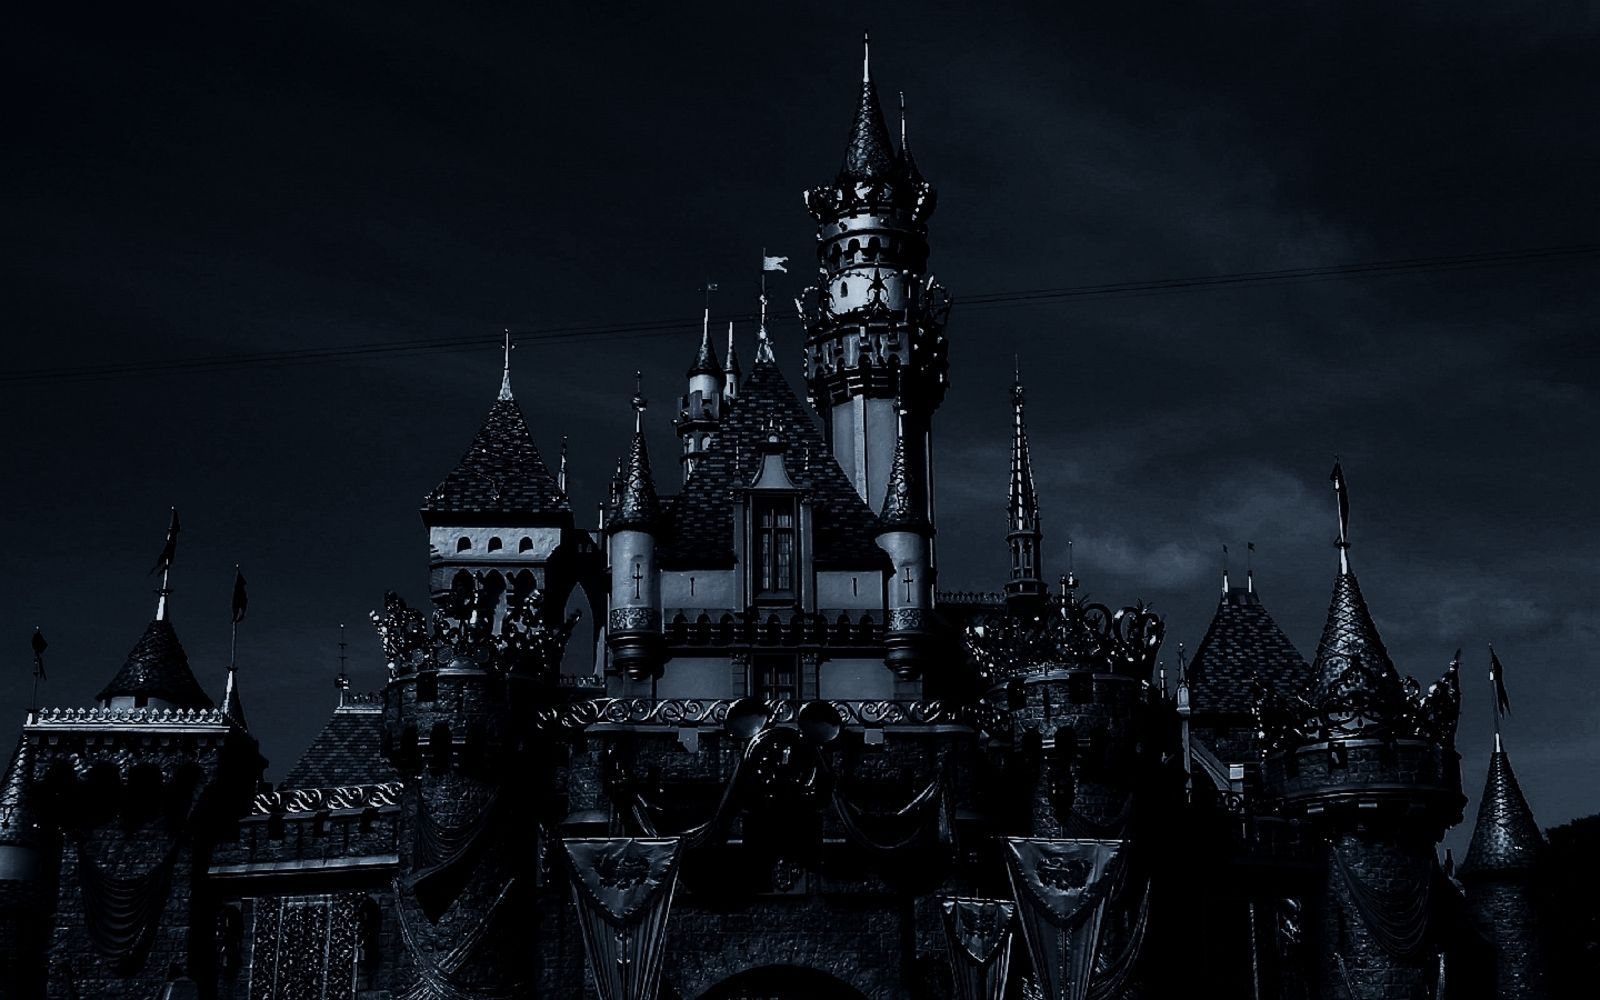 The dark castle wallpaper 2560x1600 resolution - Castle